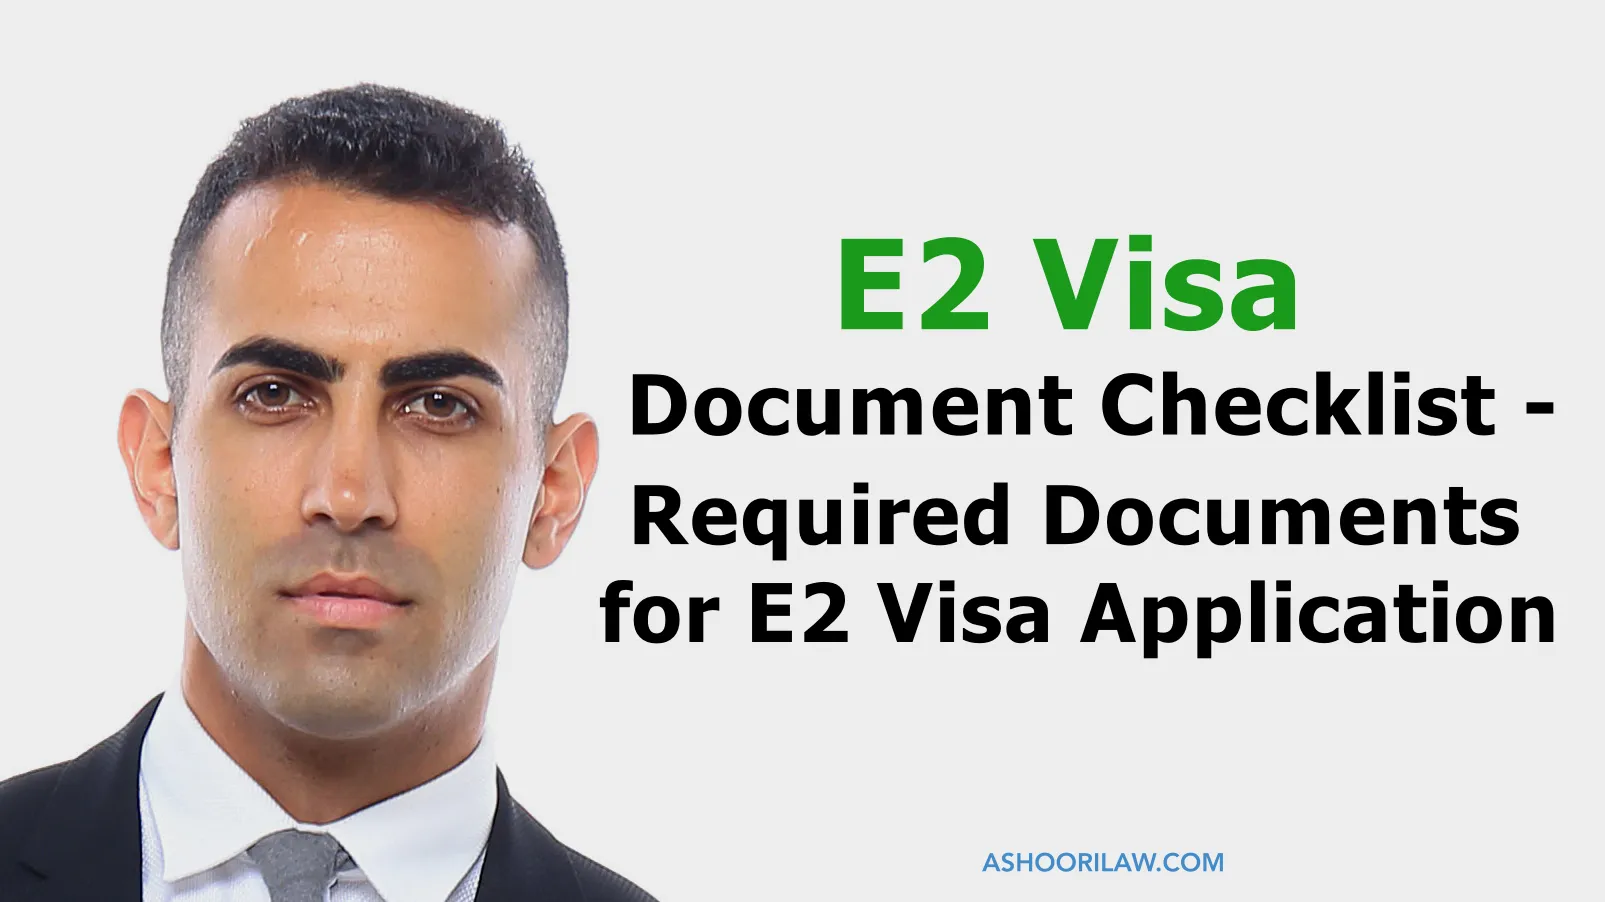 E2 Visa Document Checklist - Required Documents for E2 Visa Application